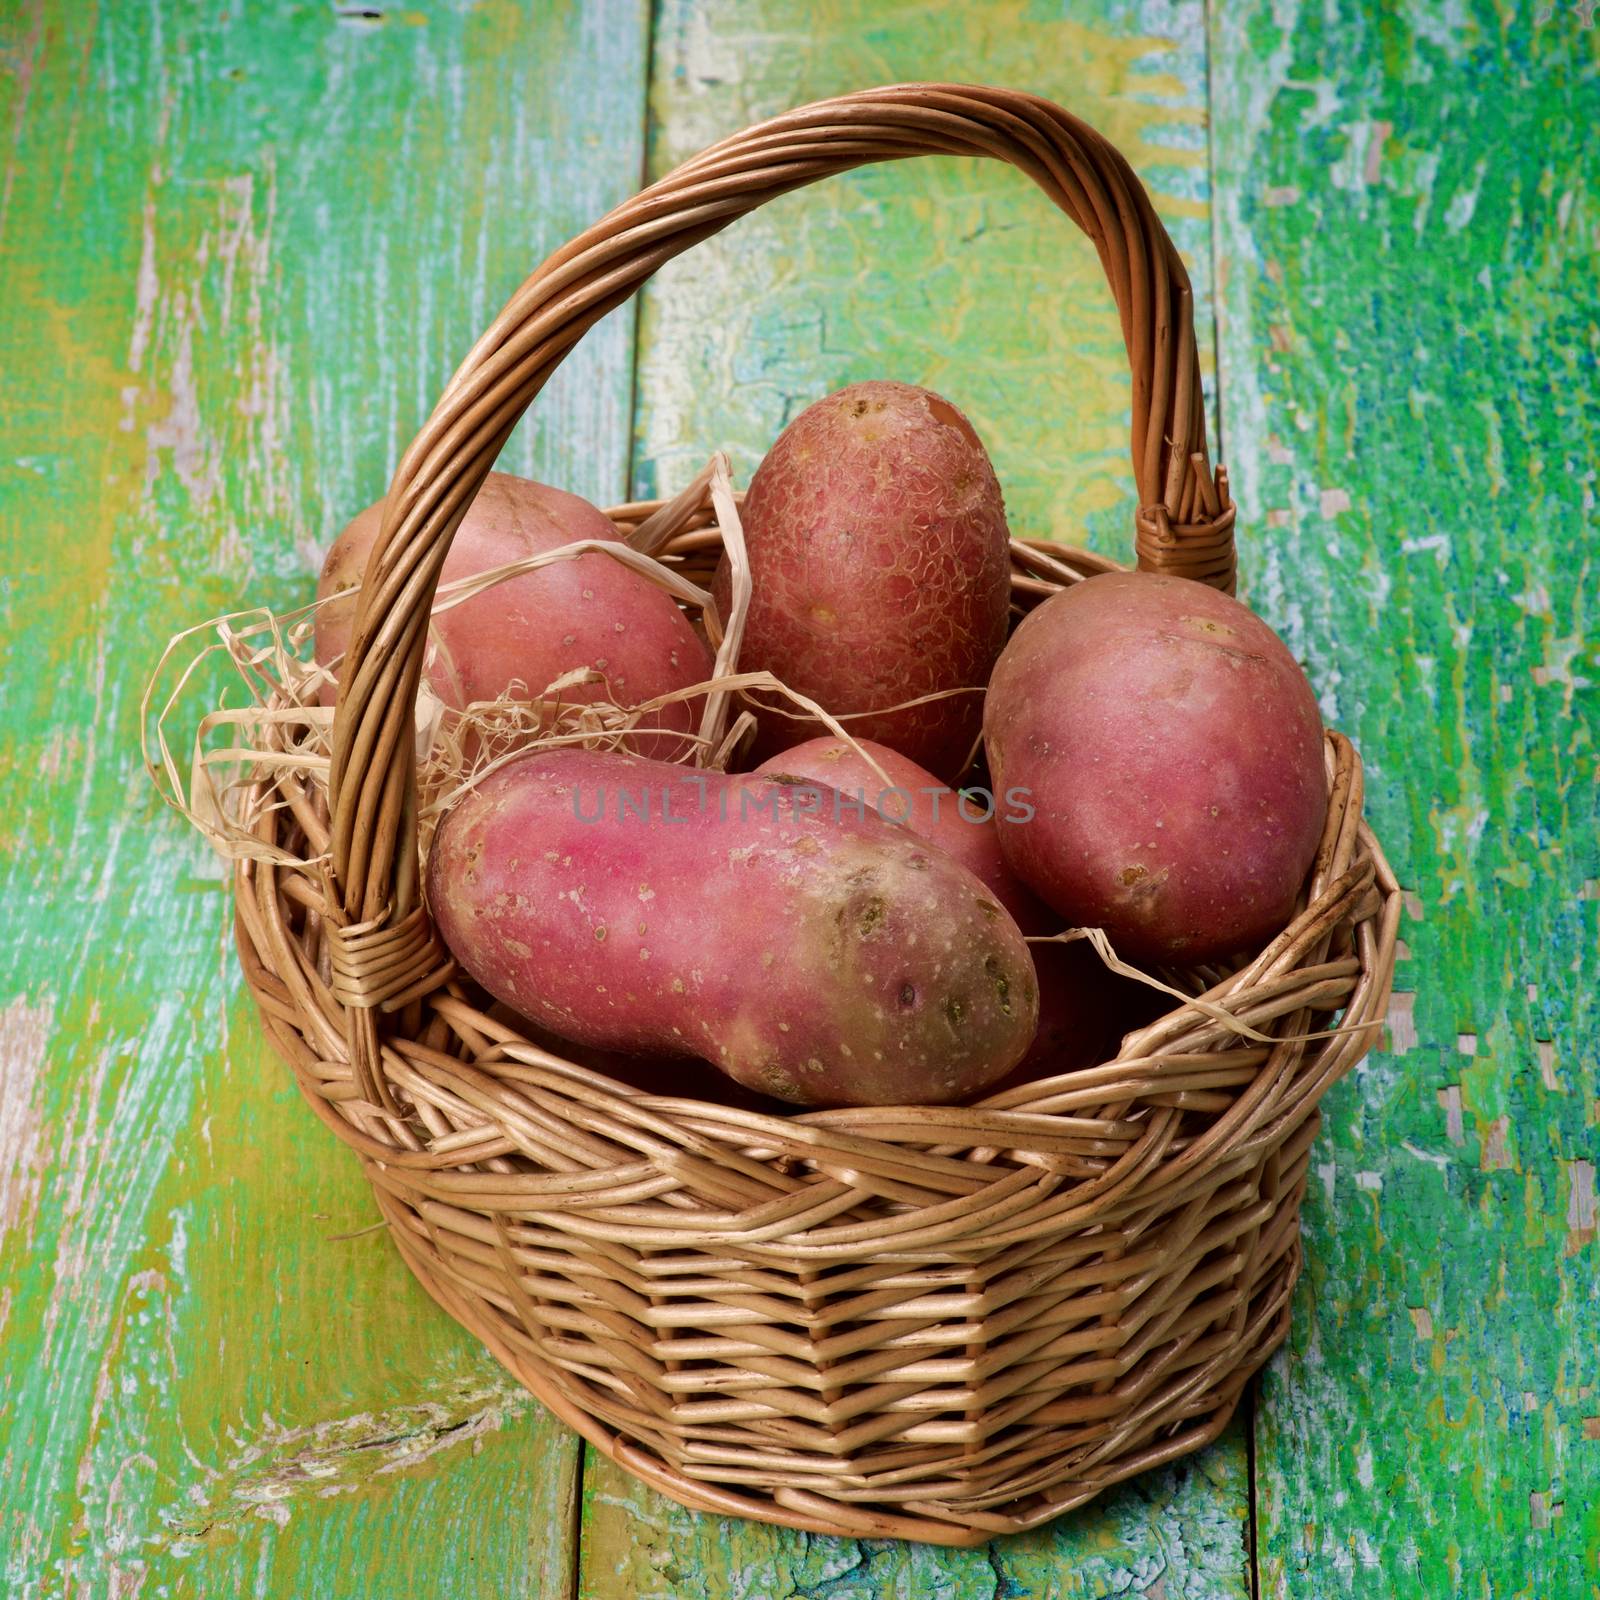 Raw Red Potatoes by zhekos